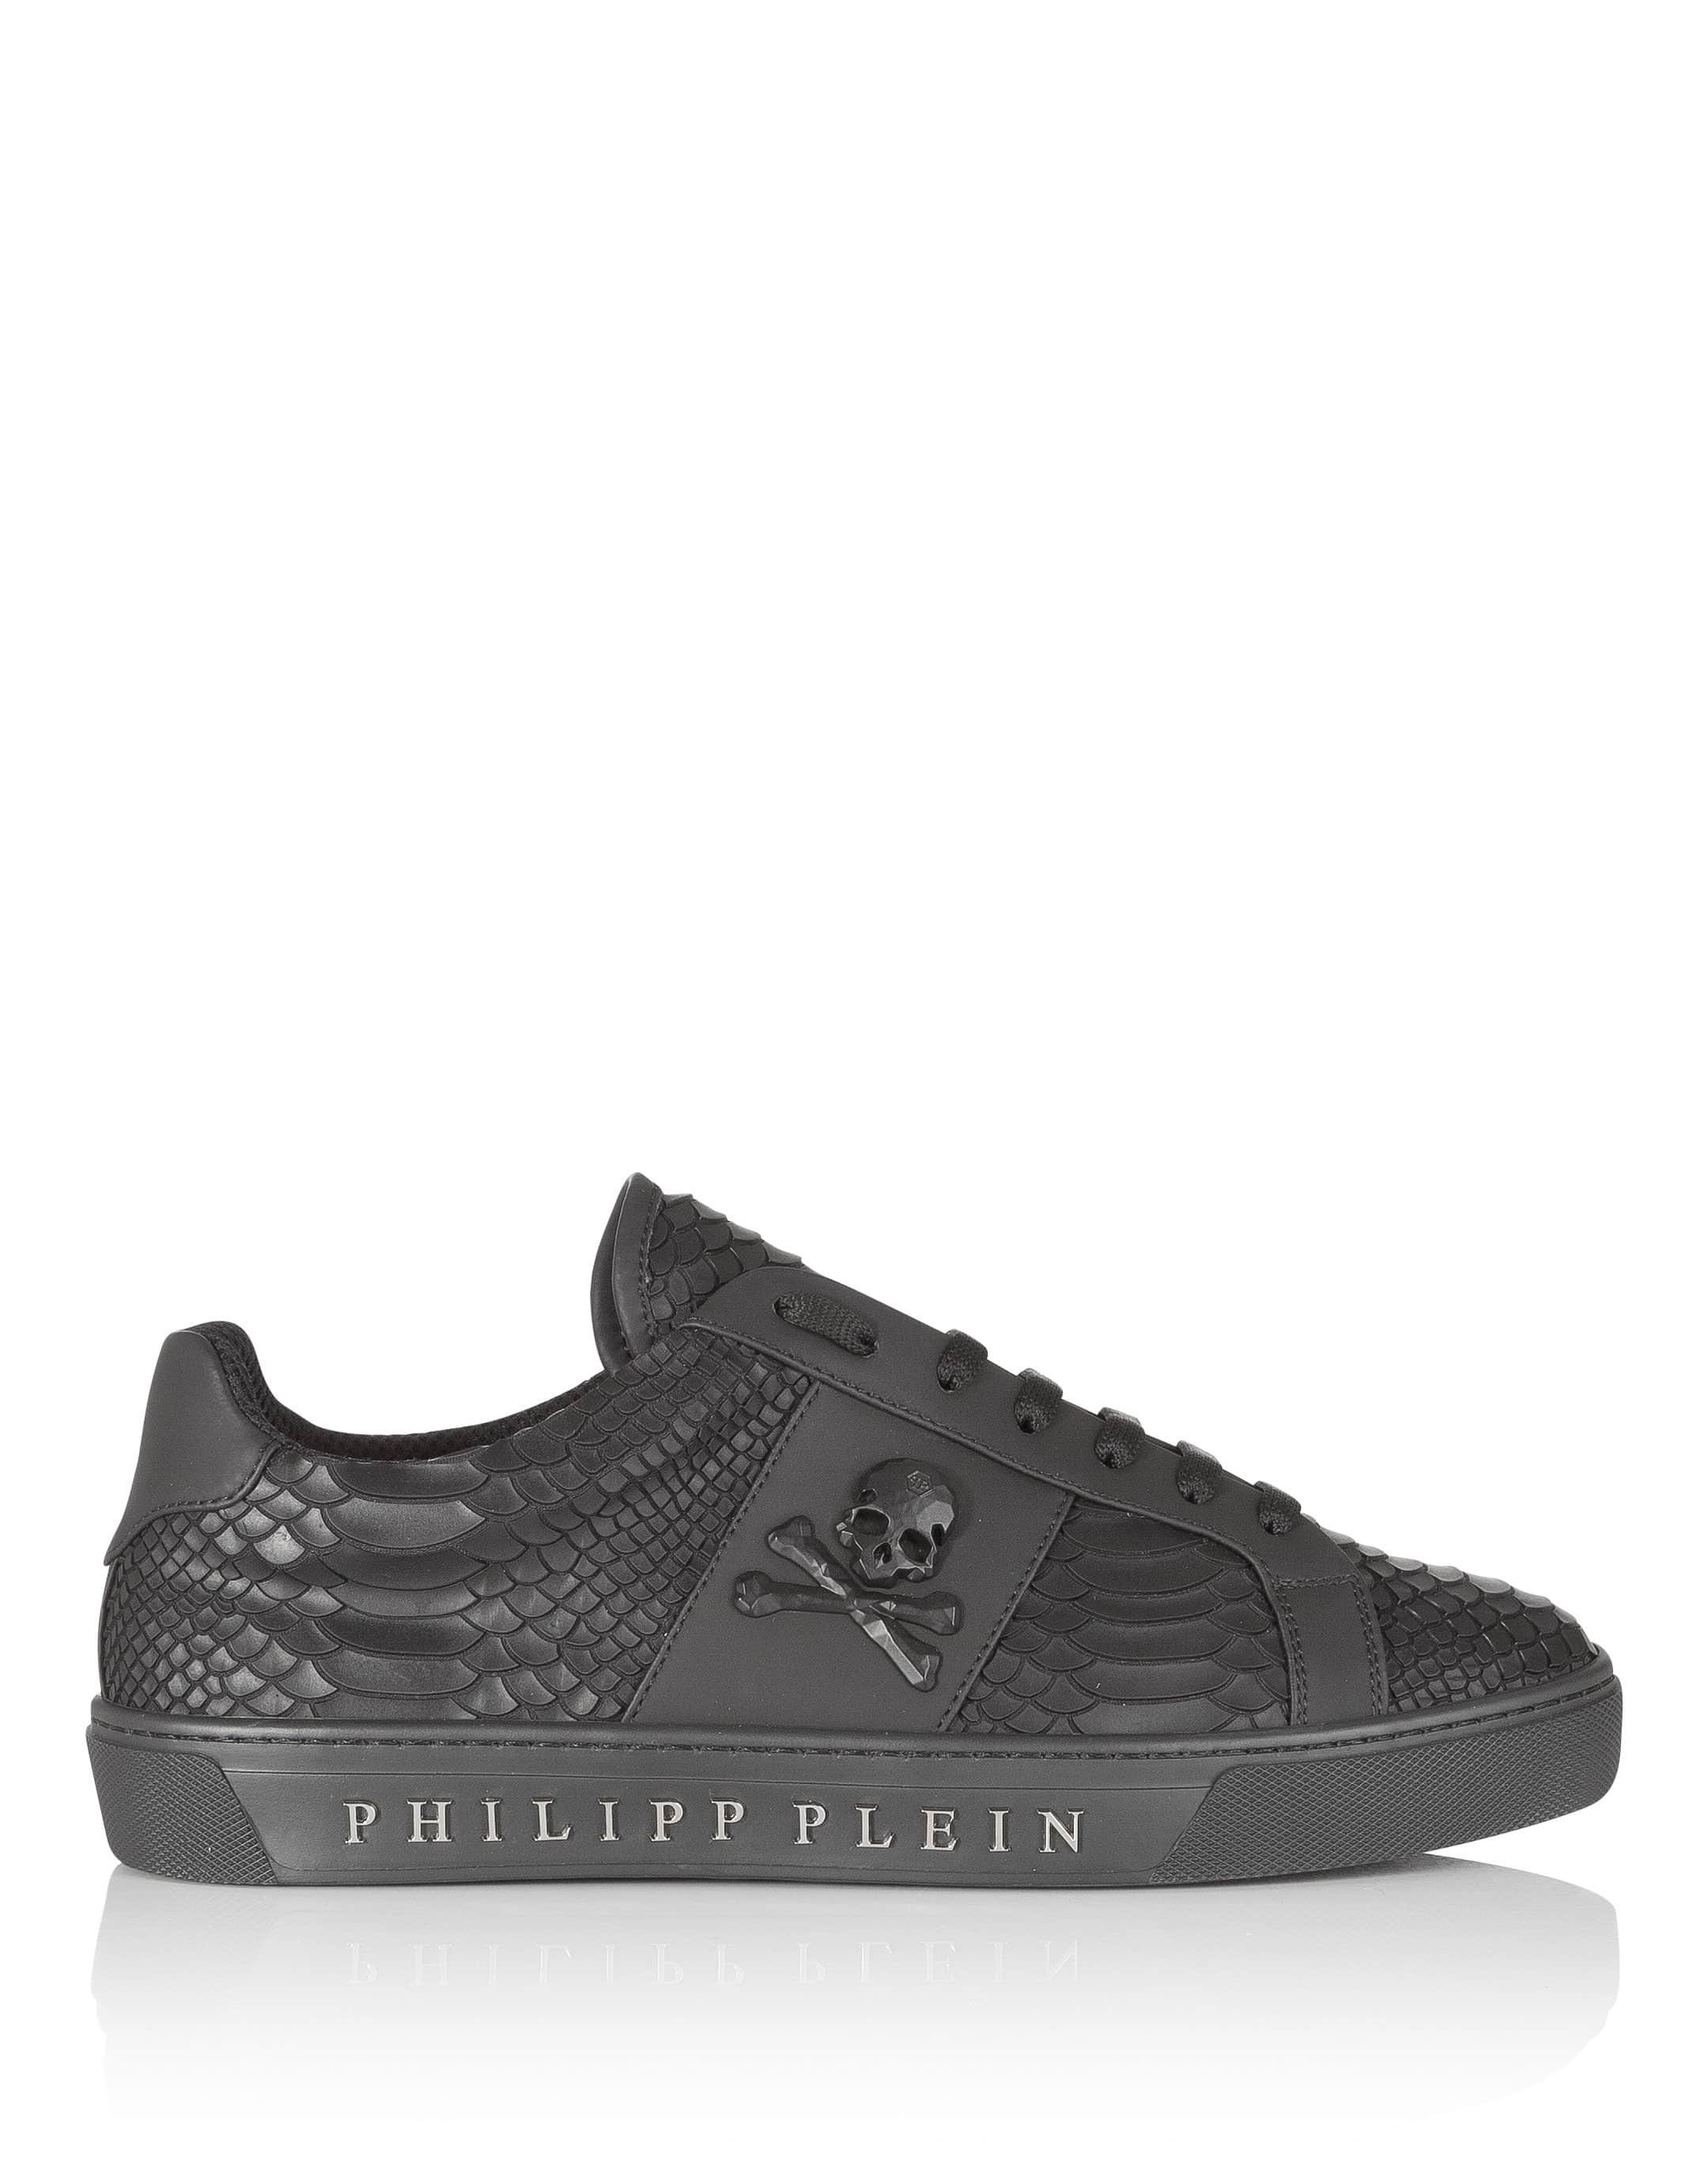 philips plein shoes